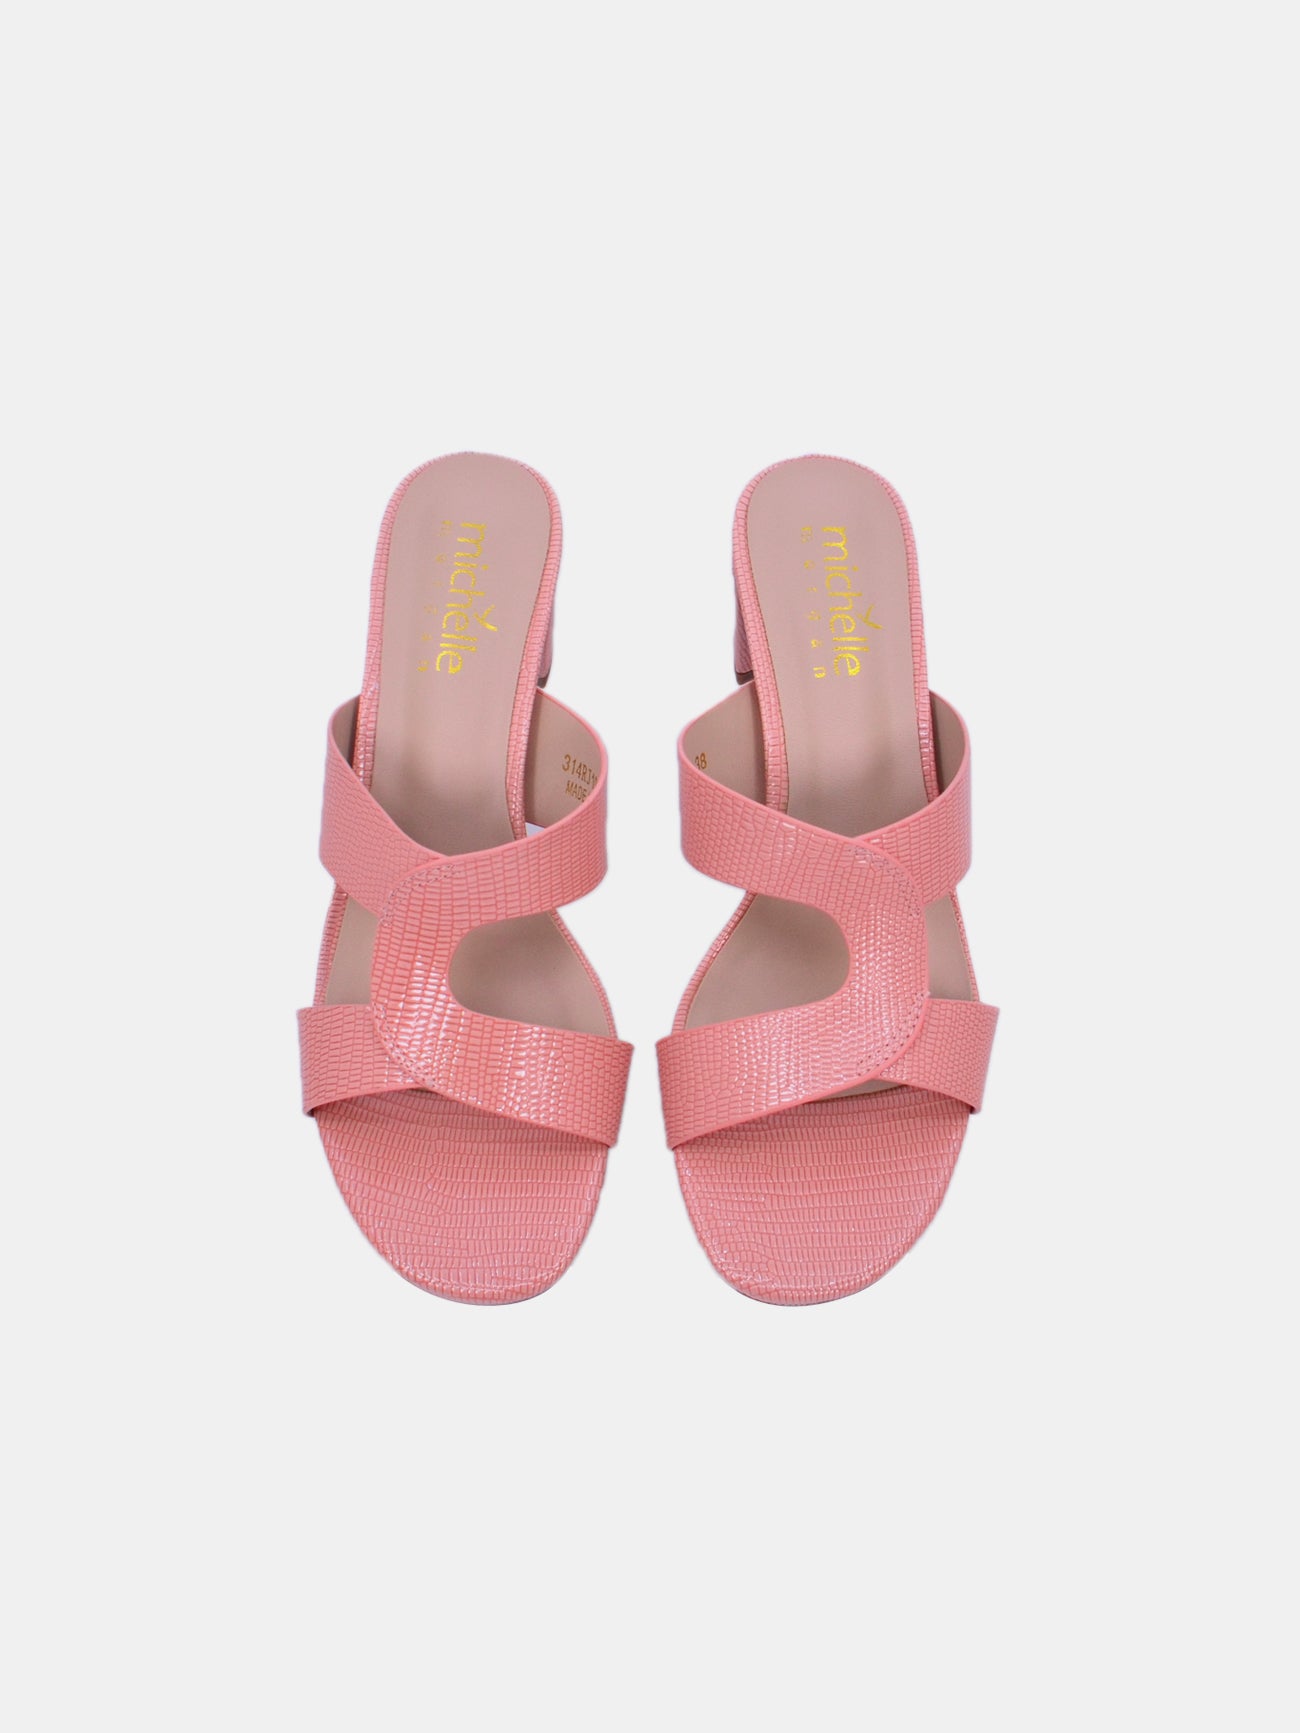 Michelle Morgan 314RJ19C Women's Heeled Sandals #color_Pink